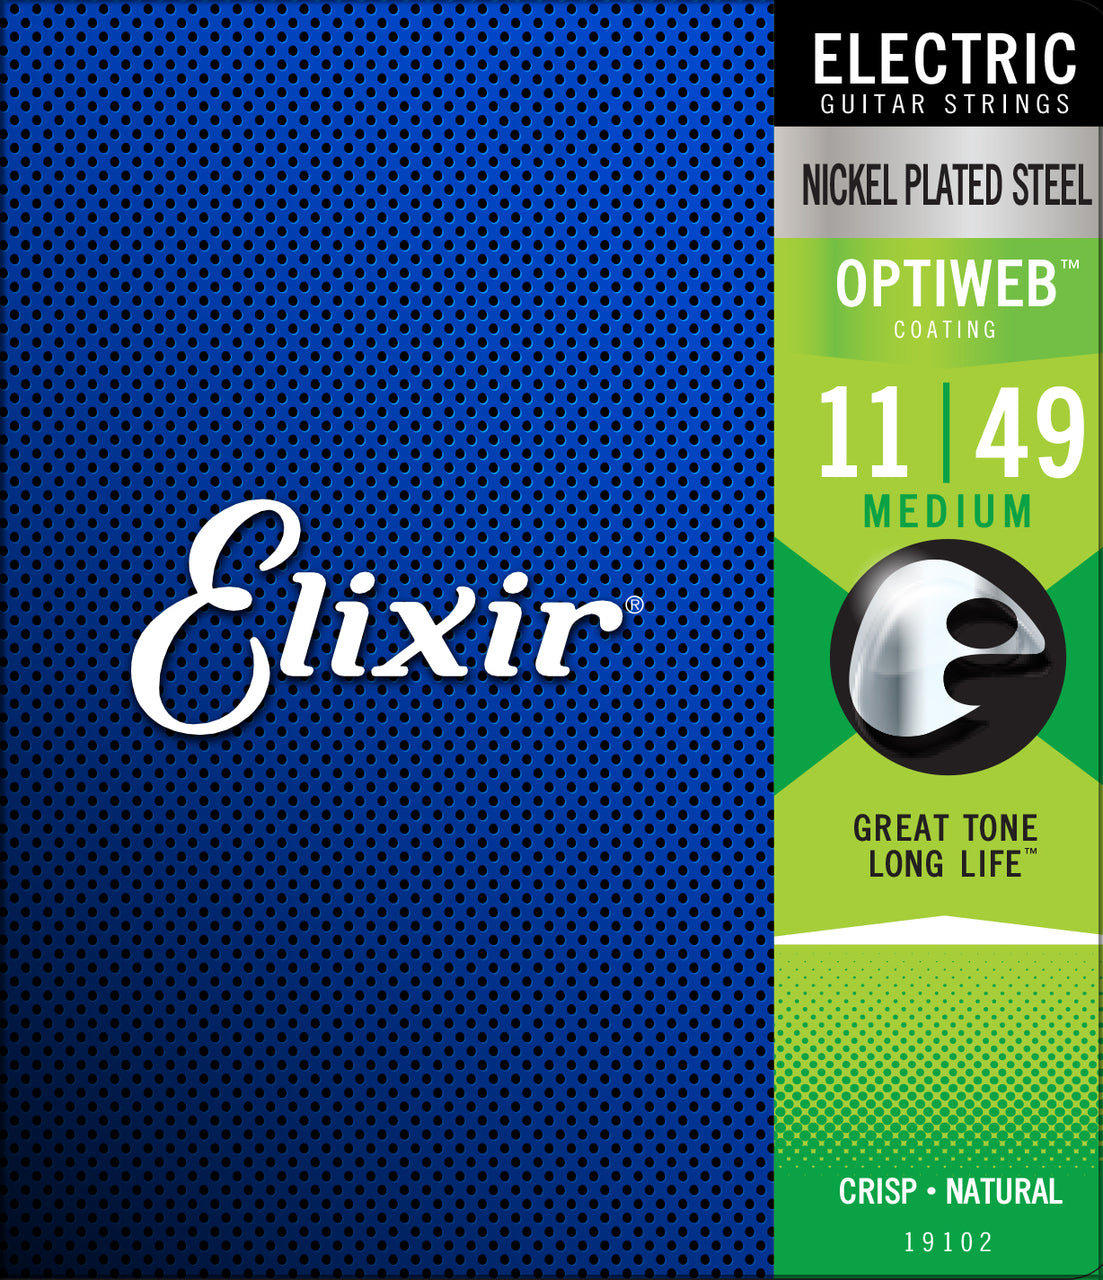 Elixir Optiweb Medium Electric Guitar Strings (11/49)